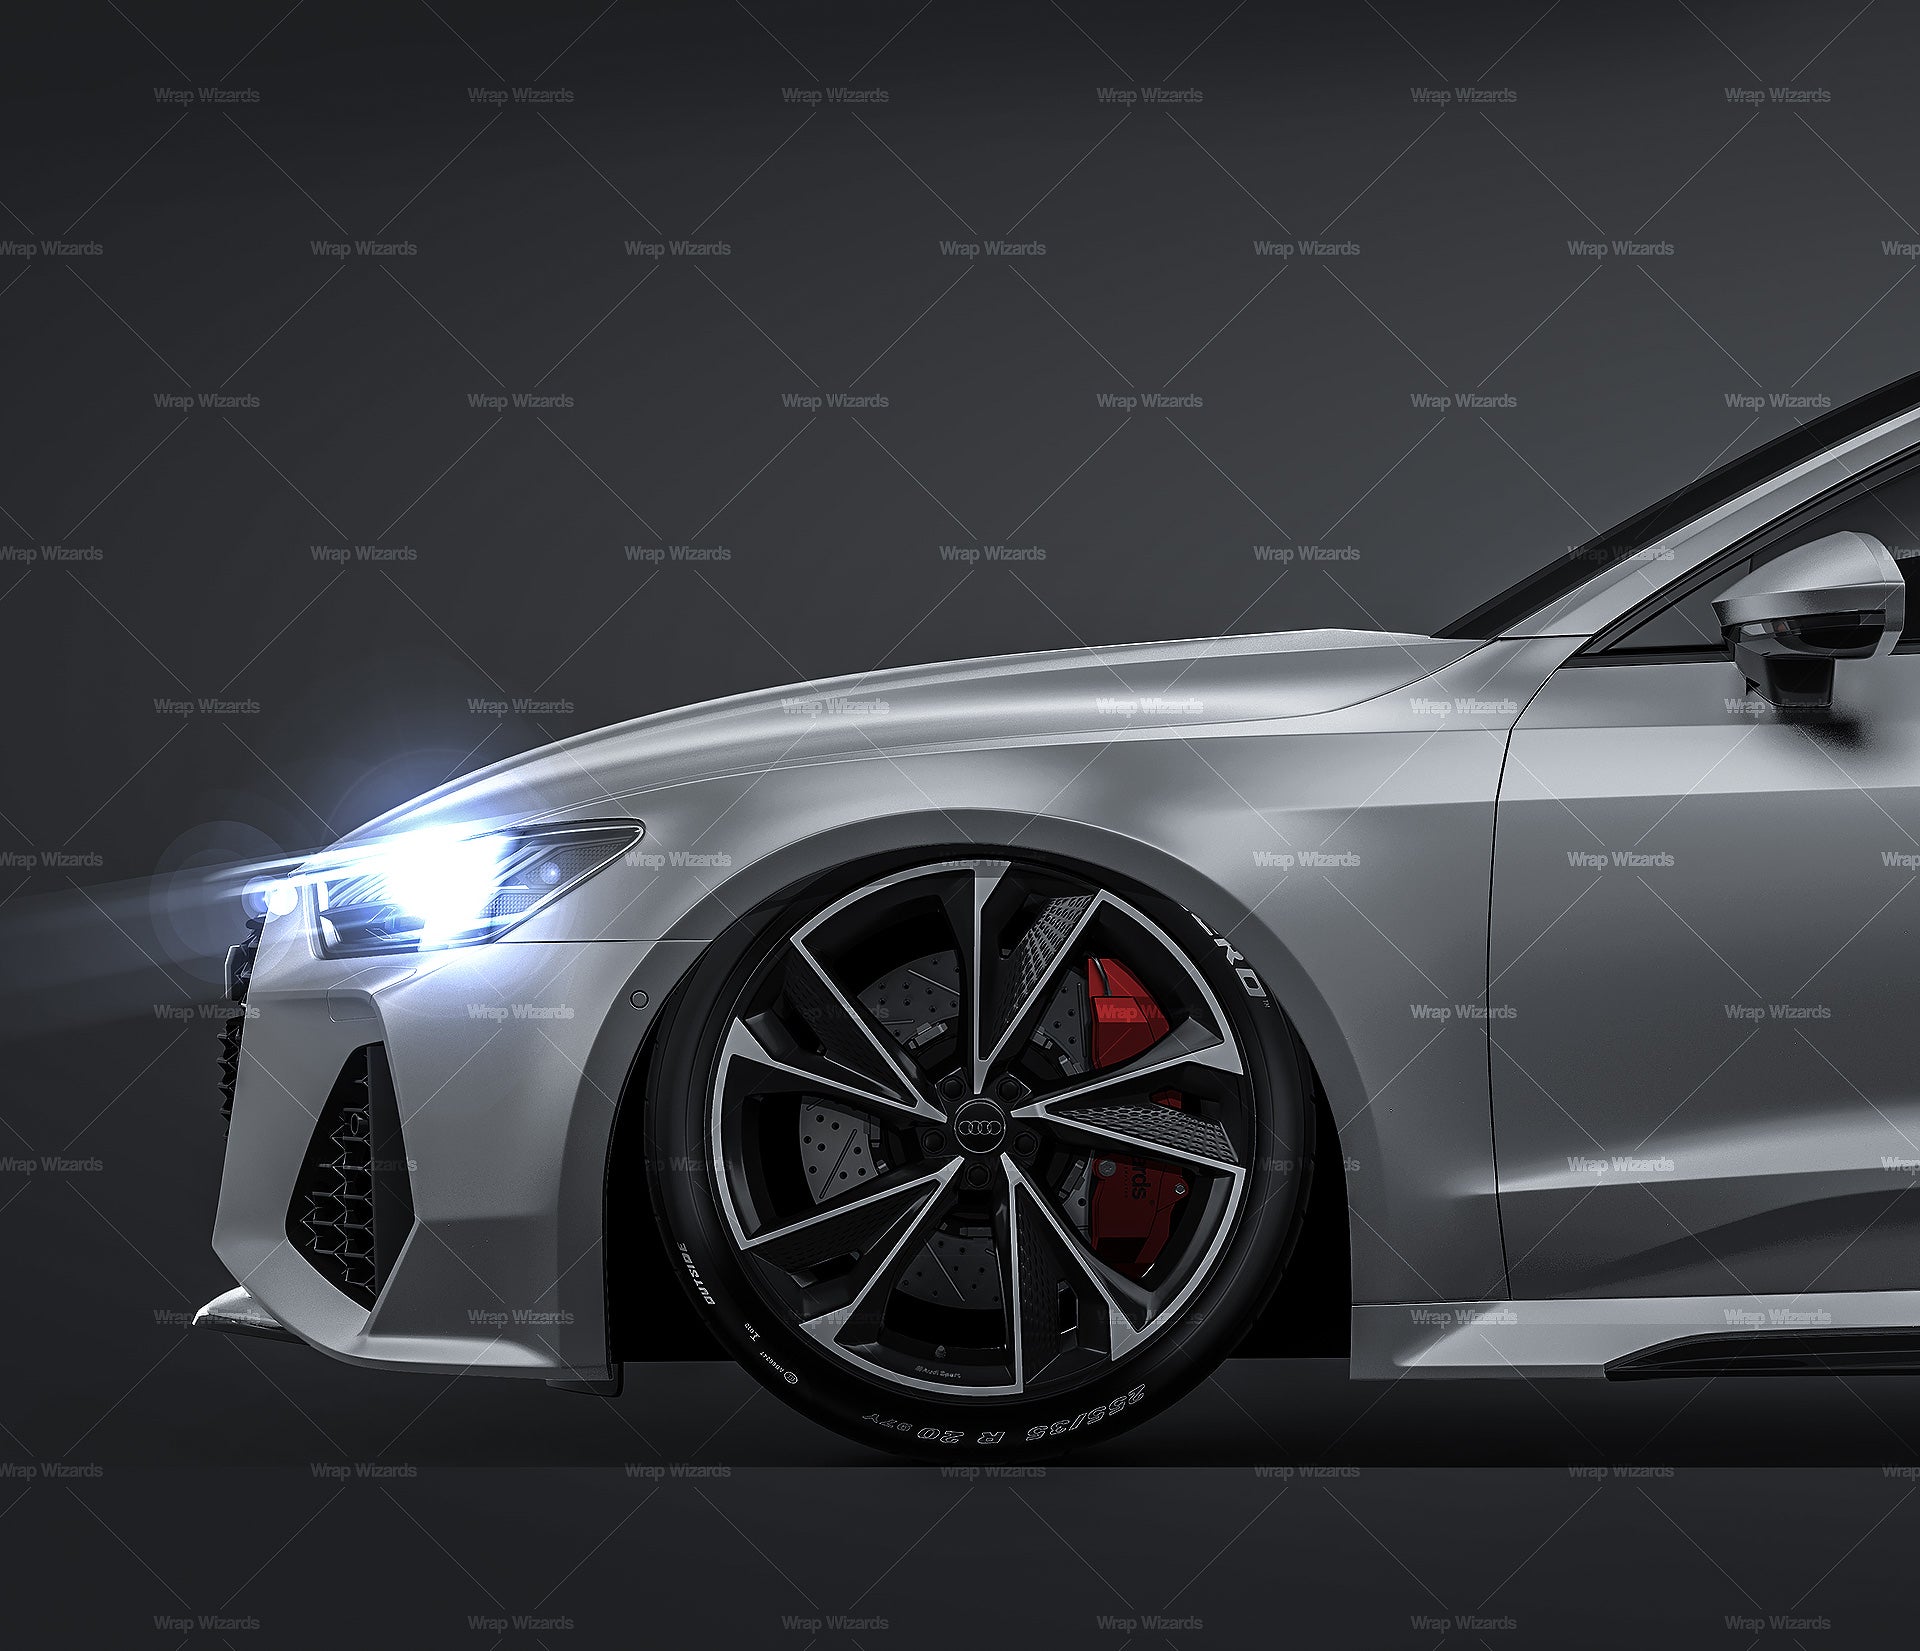 Audi RS7 2020 satin matt finish - all sides Car Mockup Template.psd